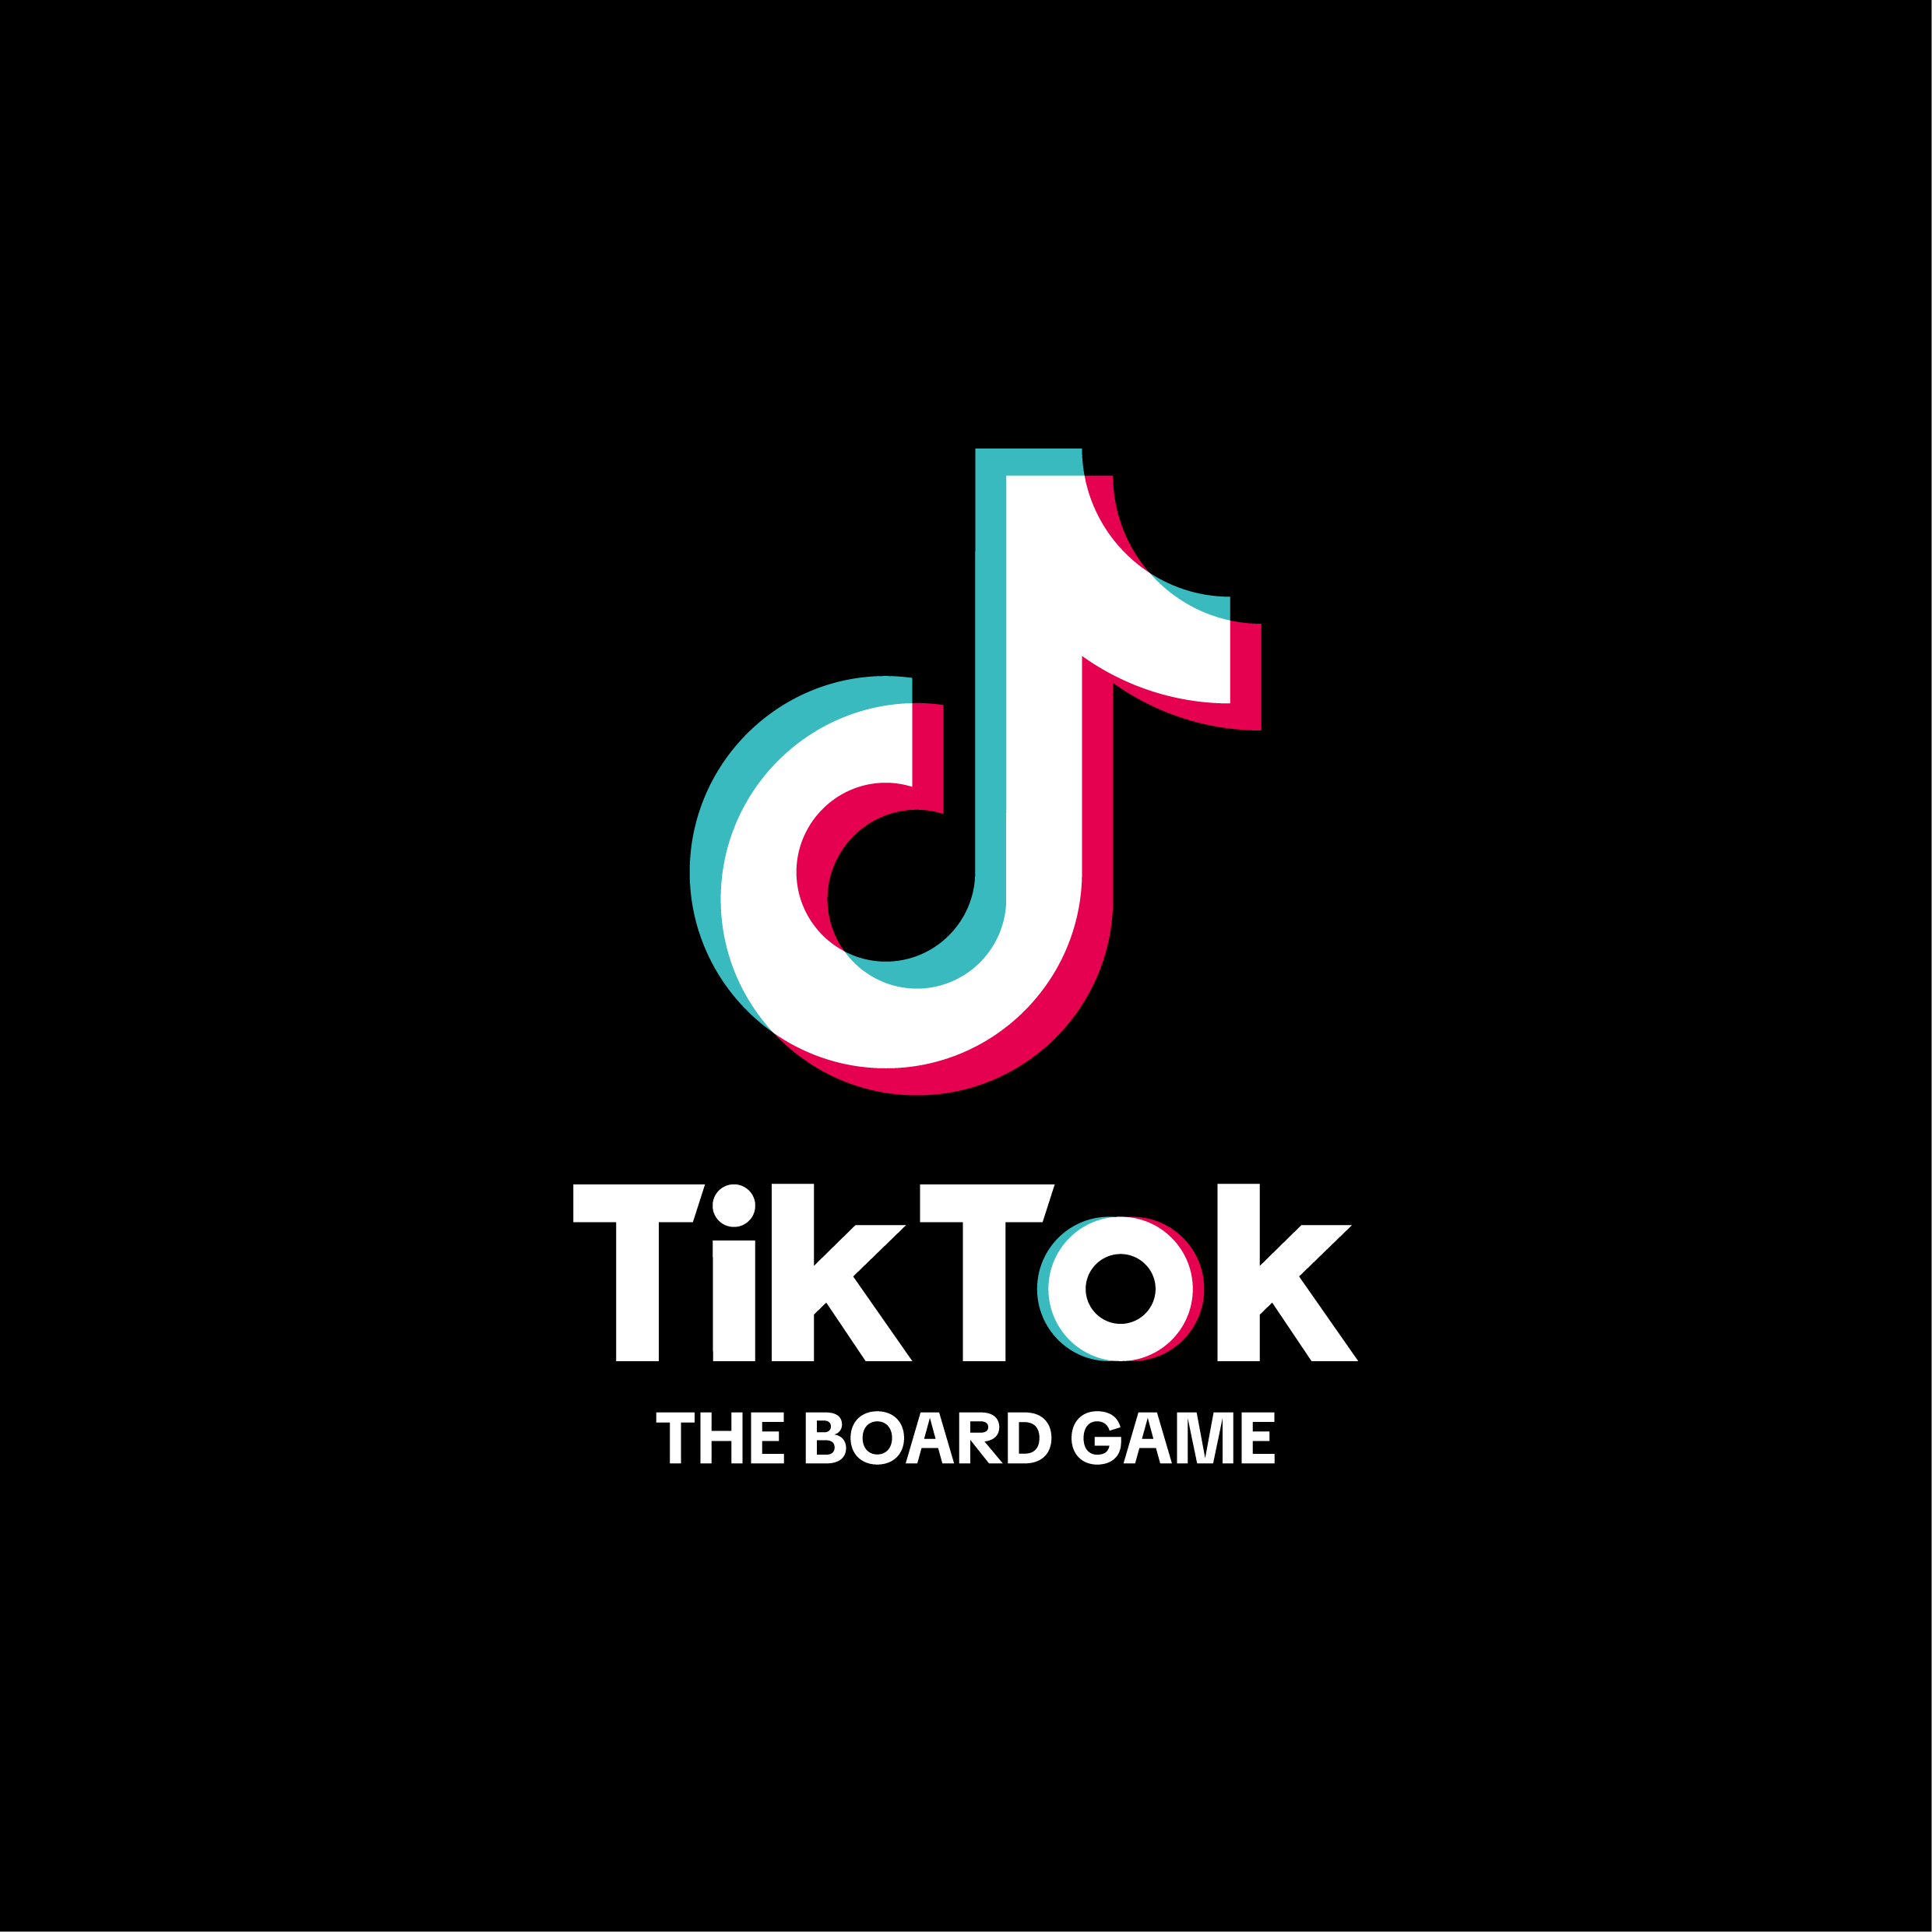 TIKTOK: THE BOARD GAME